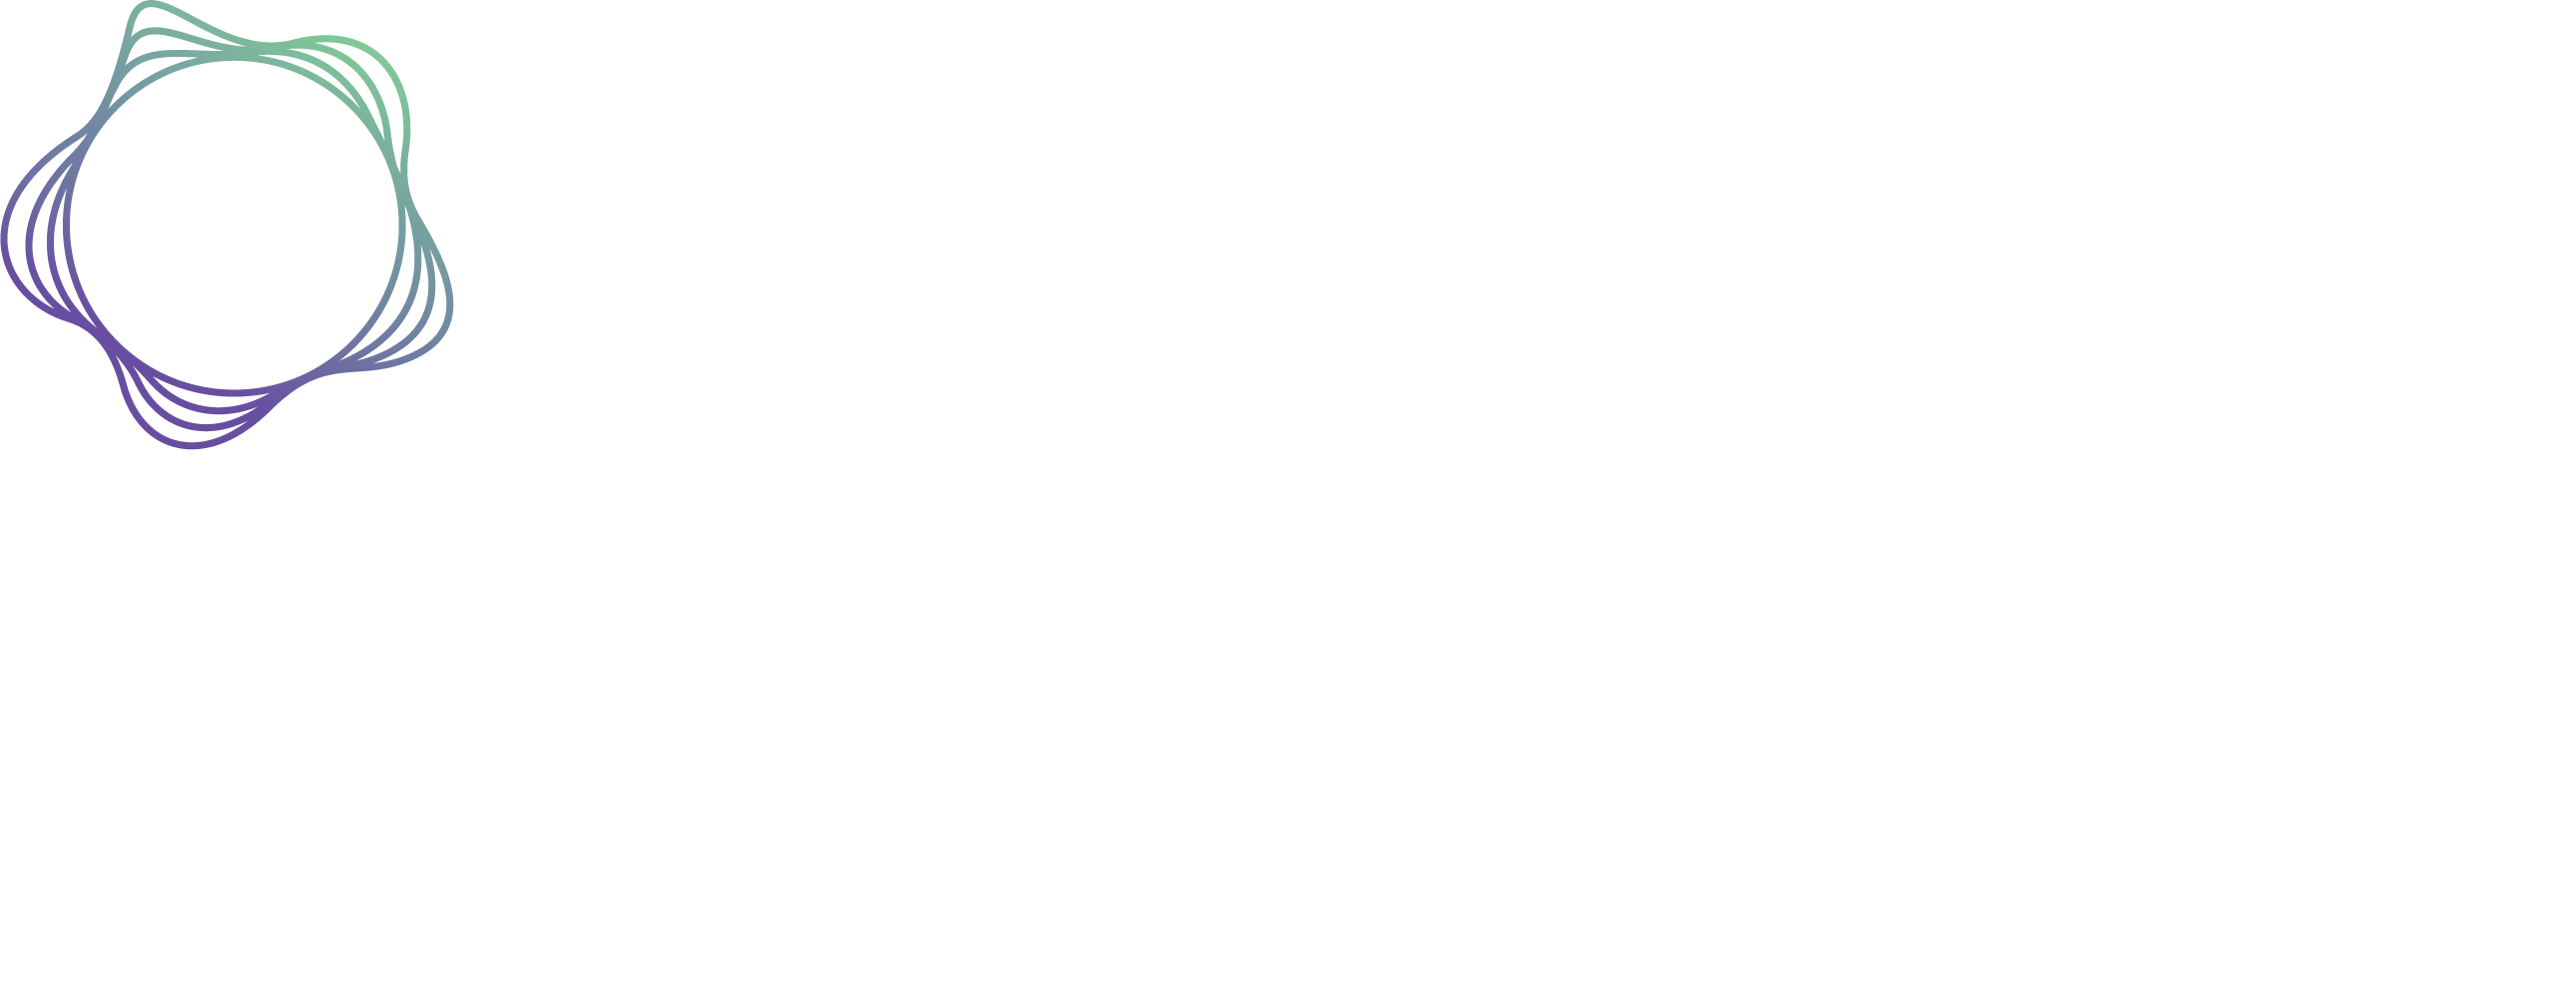 Atlantic City Energy Efficiency Programs